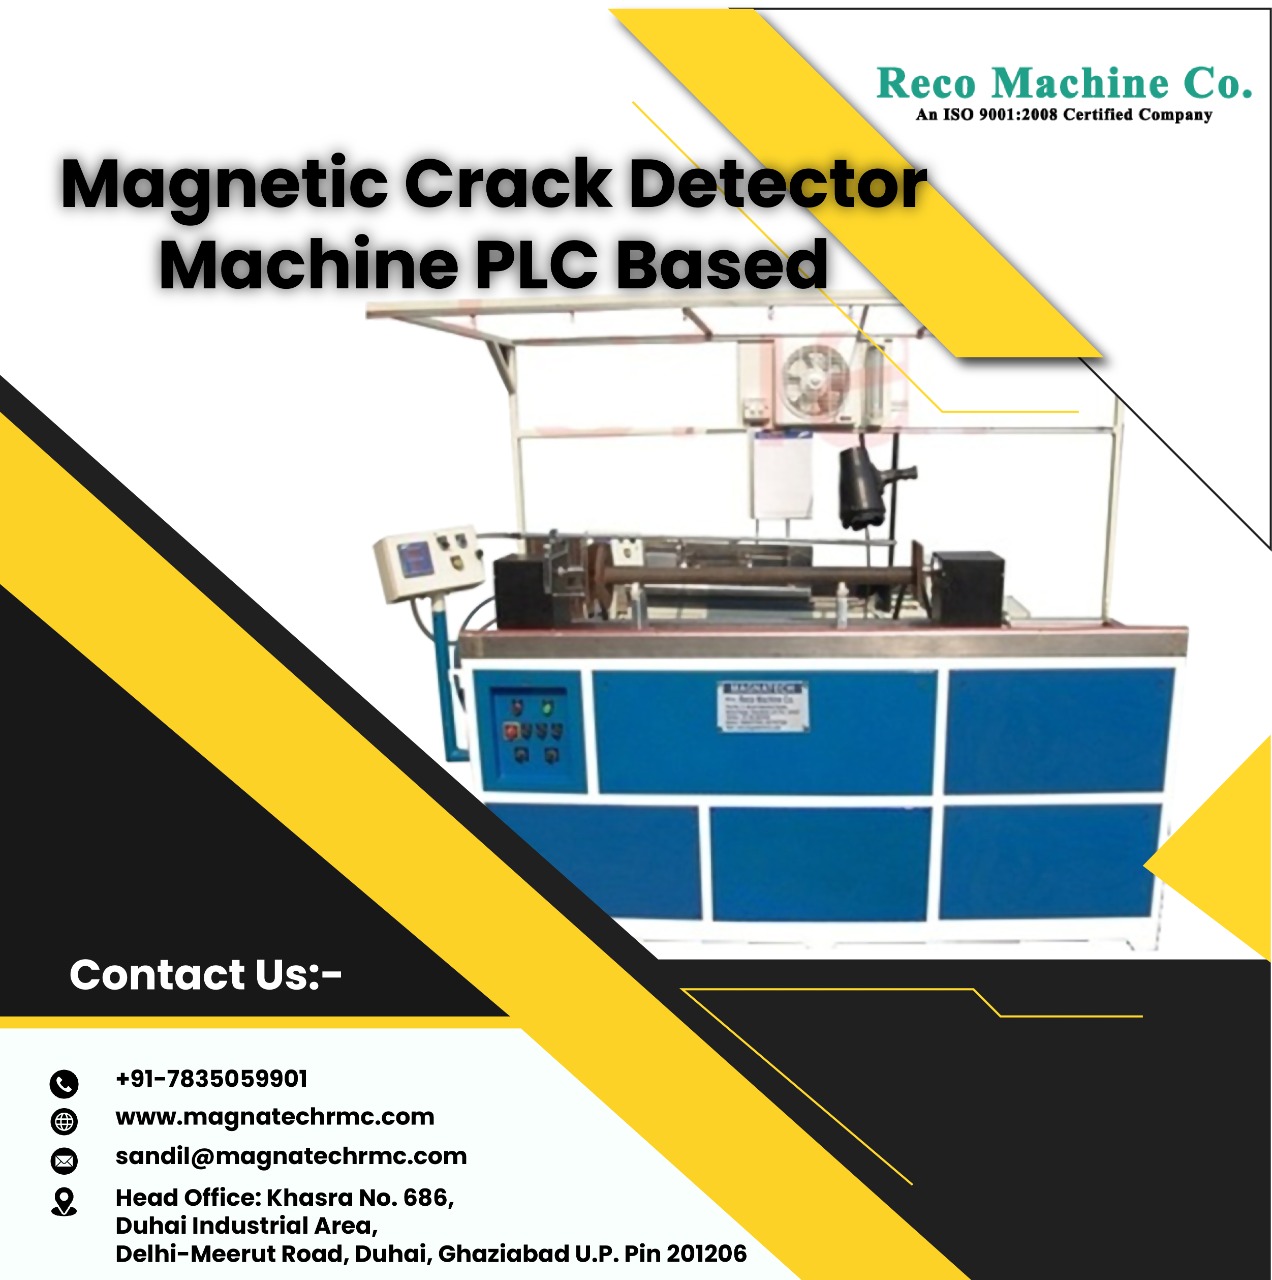 Magnetic Crack Detector Machine Contact Us